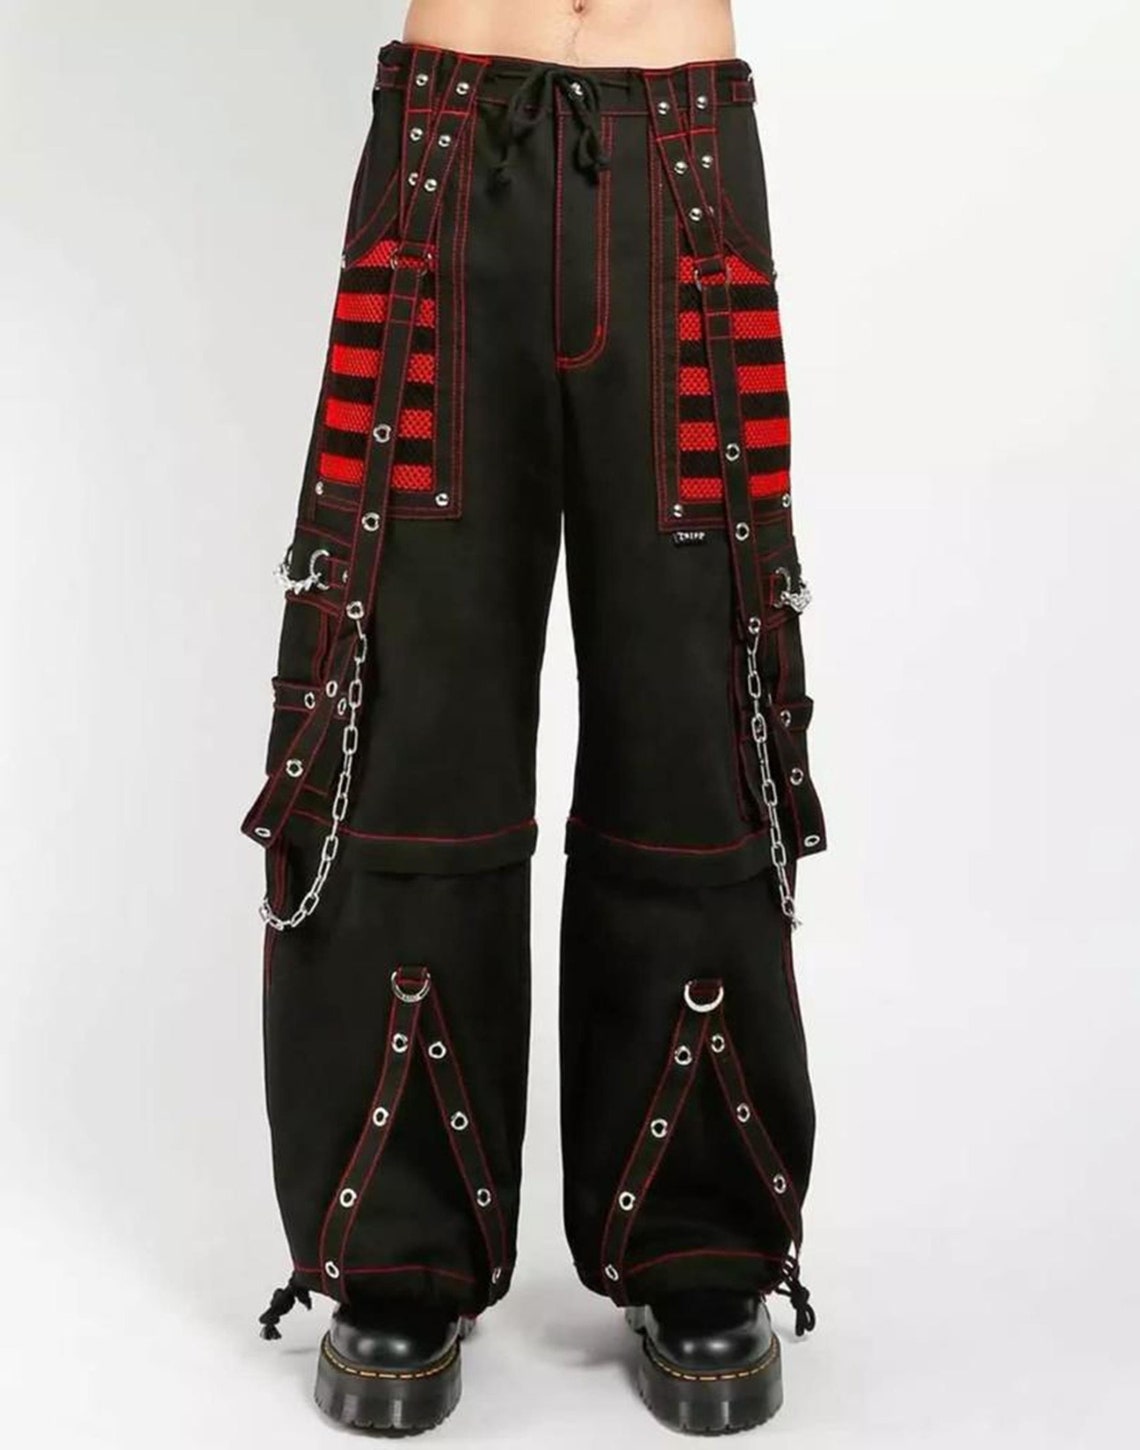 Men's Gothic Handmade Bondage Trouser Punk Rock Transformer Black Red Gothic  Pant/USA/Pants - DARK ROCK - Premium Gothic Clothing shop for men and women